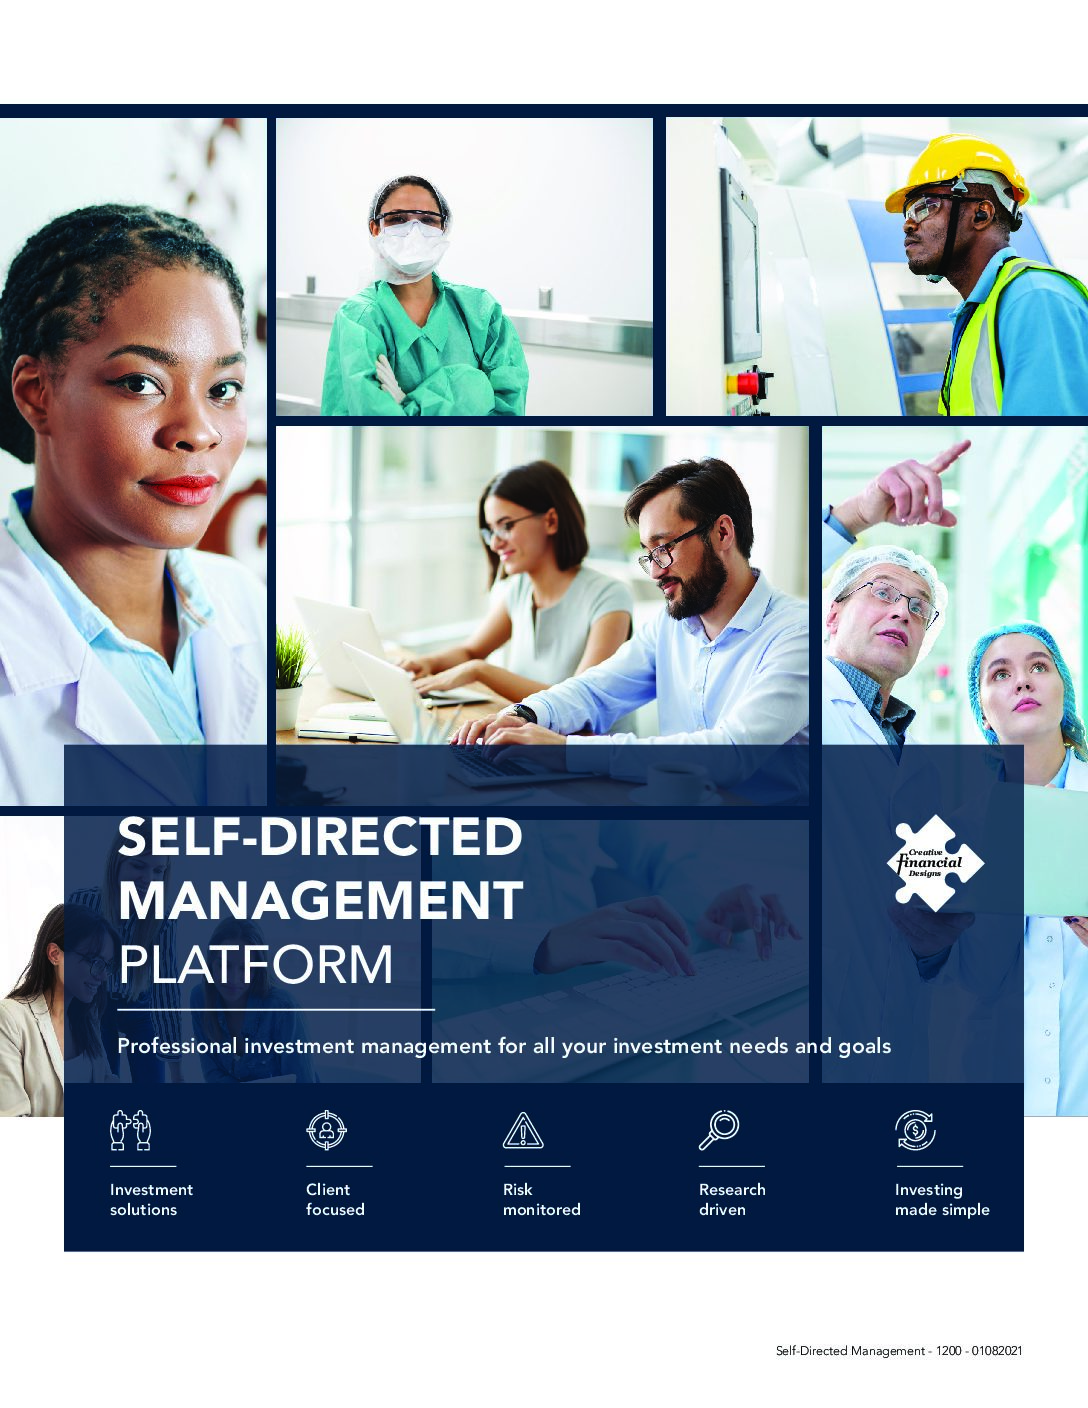 Self-Directed Retirement Management Platform